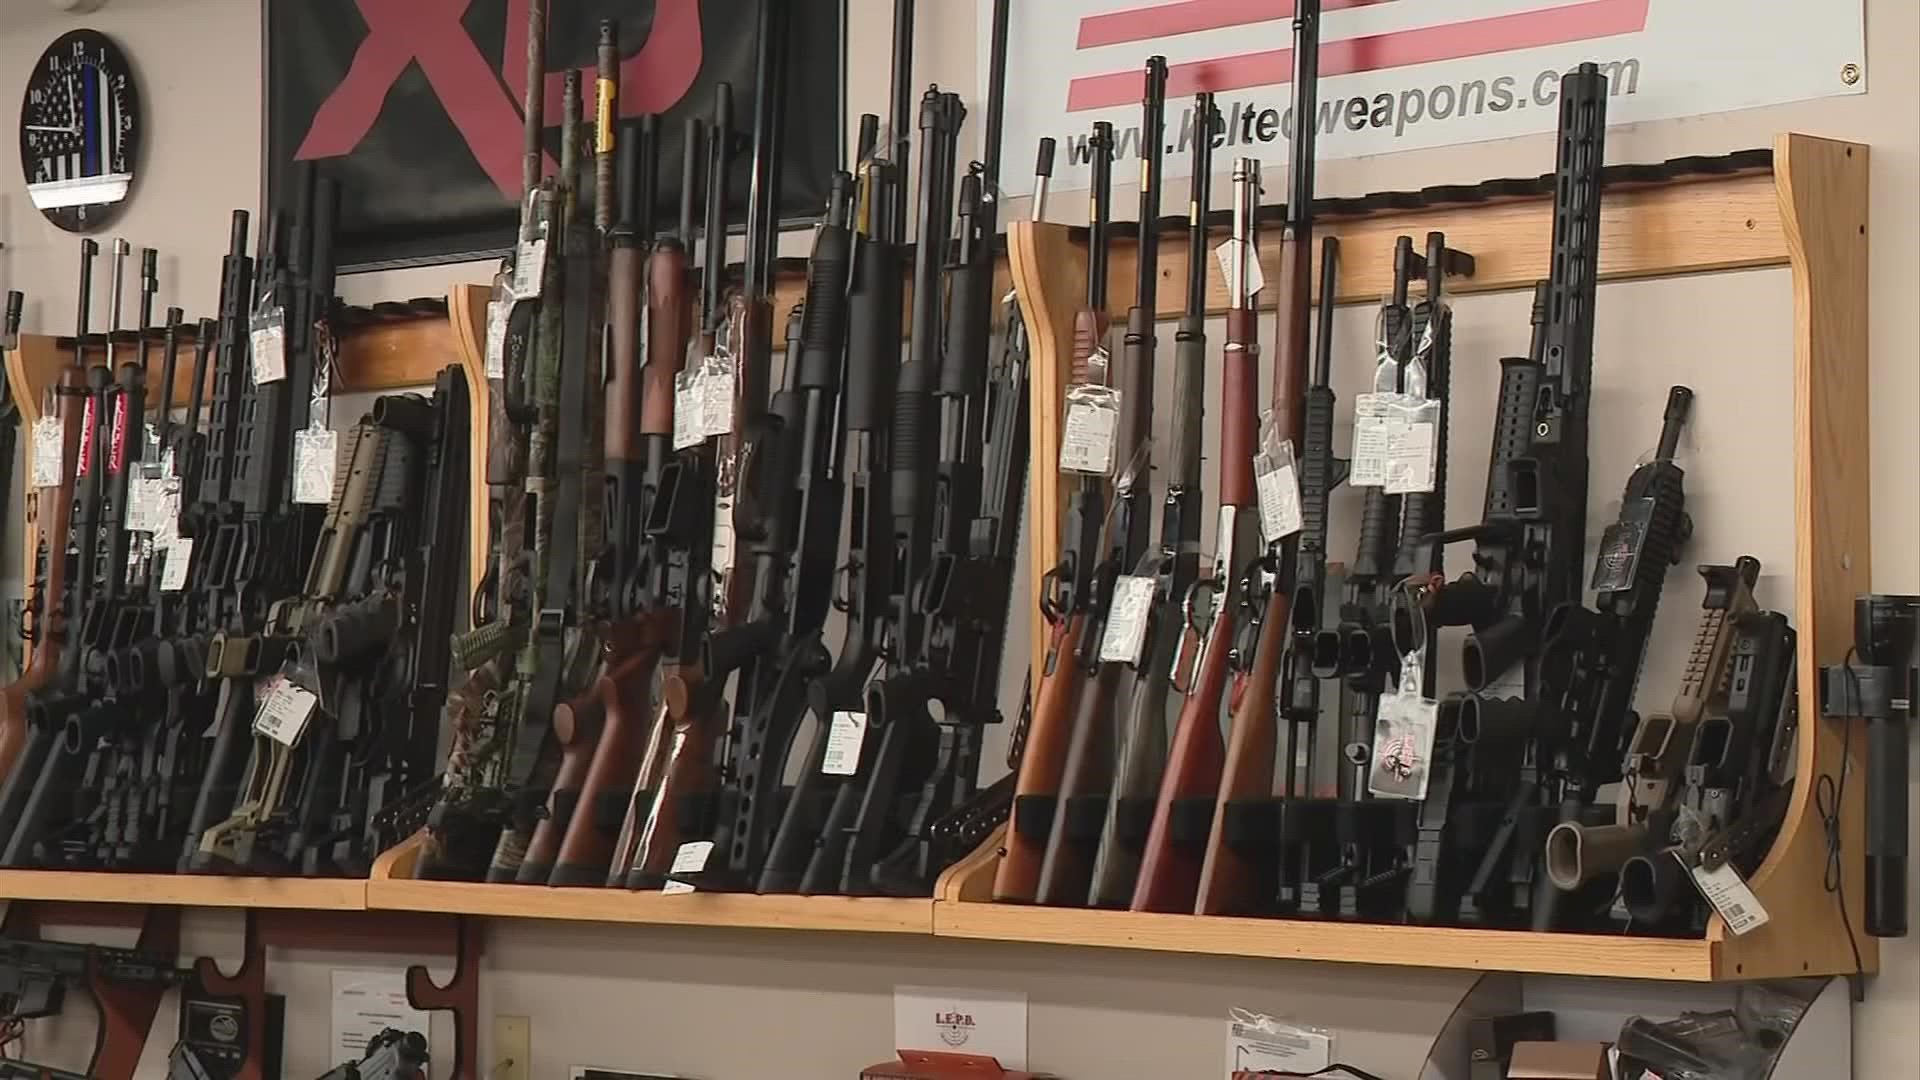 Visa Inc. said Saturday that it plans to start separately categorizing sales at gun shops, a major win for gun control advocates.